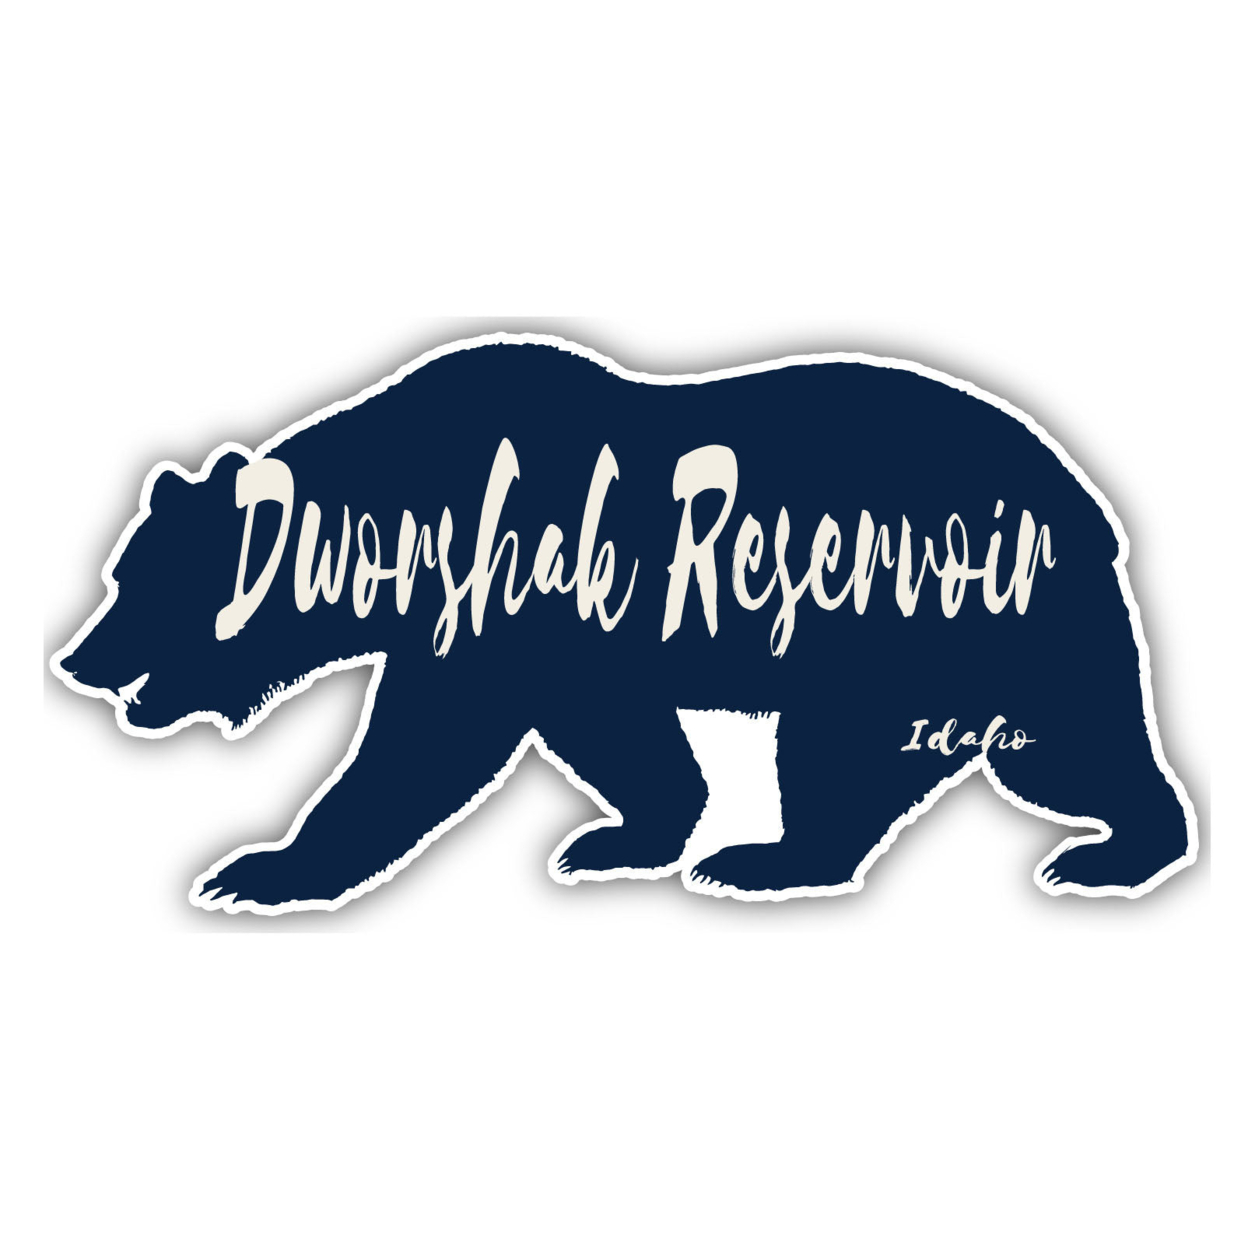 Dworshak Reservoir Idaho Souvenir Decorative Stickers (Choose Theme And Size) - 4-Pack, 4-Inch, Tent